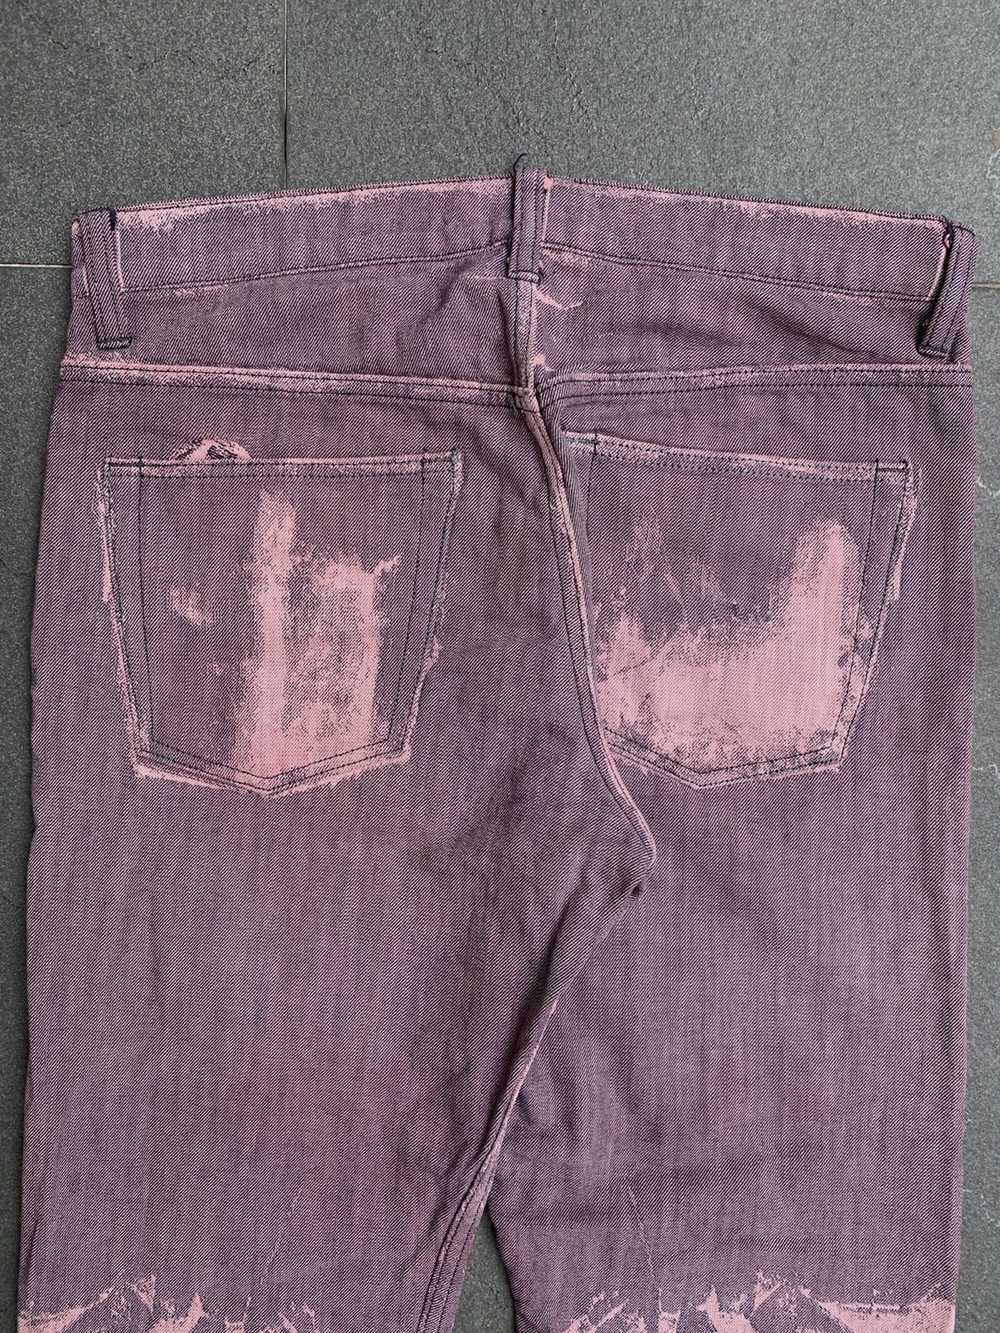 Issey Miyake APOC Galaxy Purple Denim Jeans - image 8